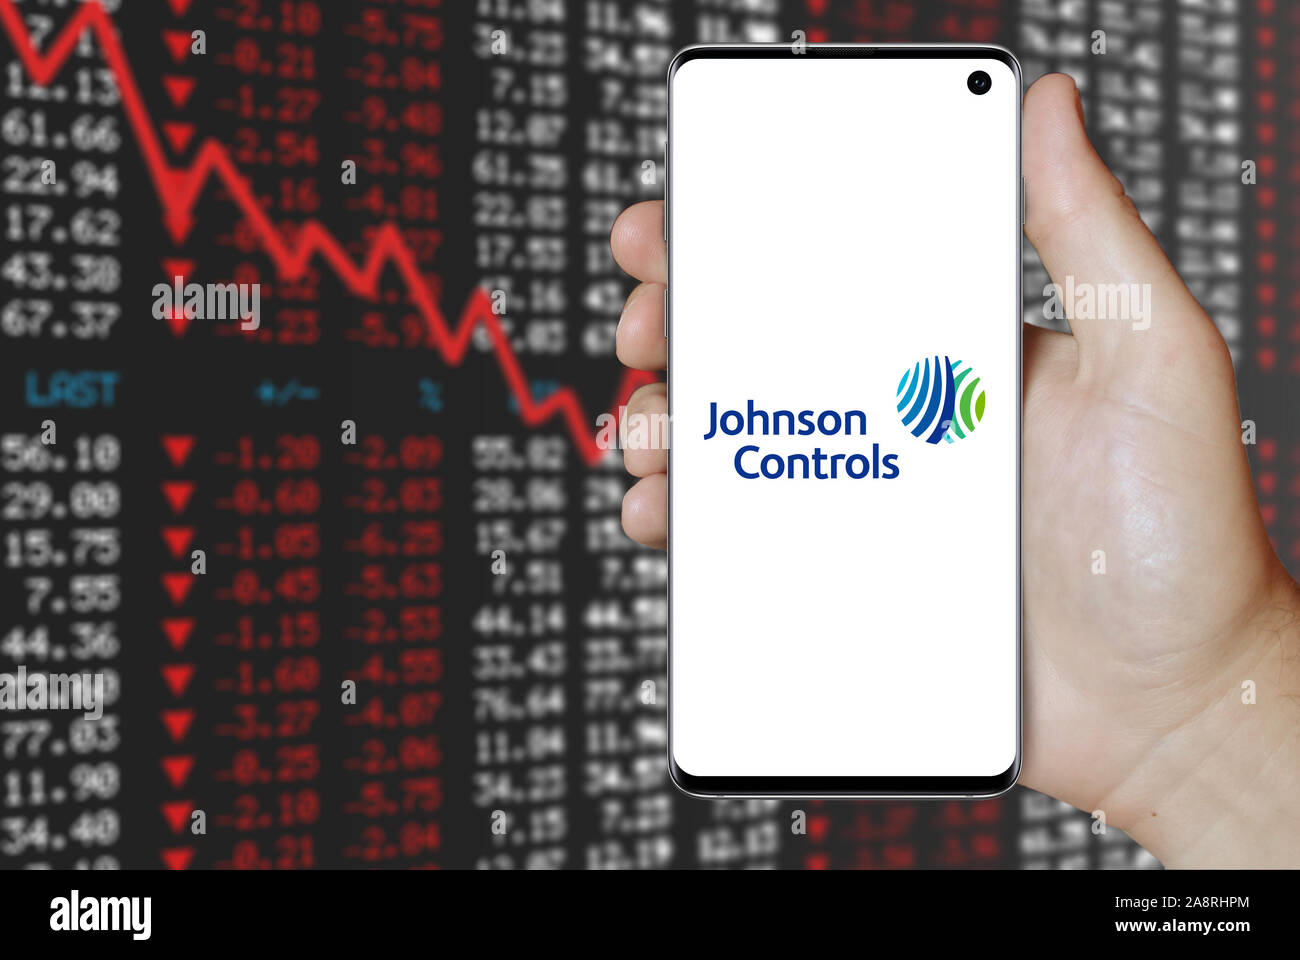 Logo of public company Johnson Controls International displayed on a  smartphone. Negative stock market background. Credit: PIXDUCE Stock Photo -  Alamy